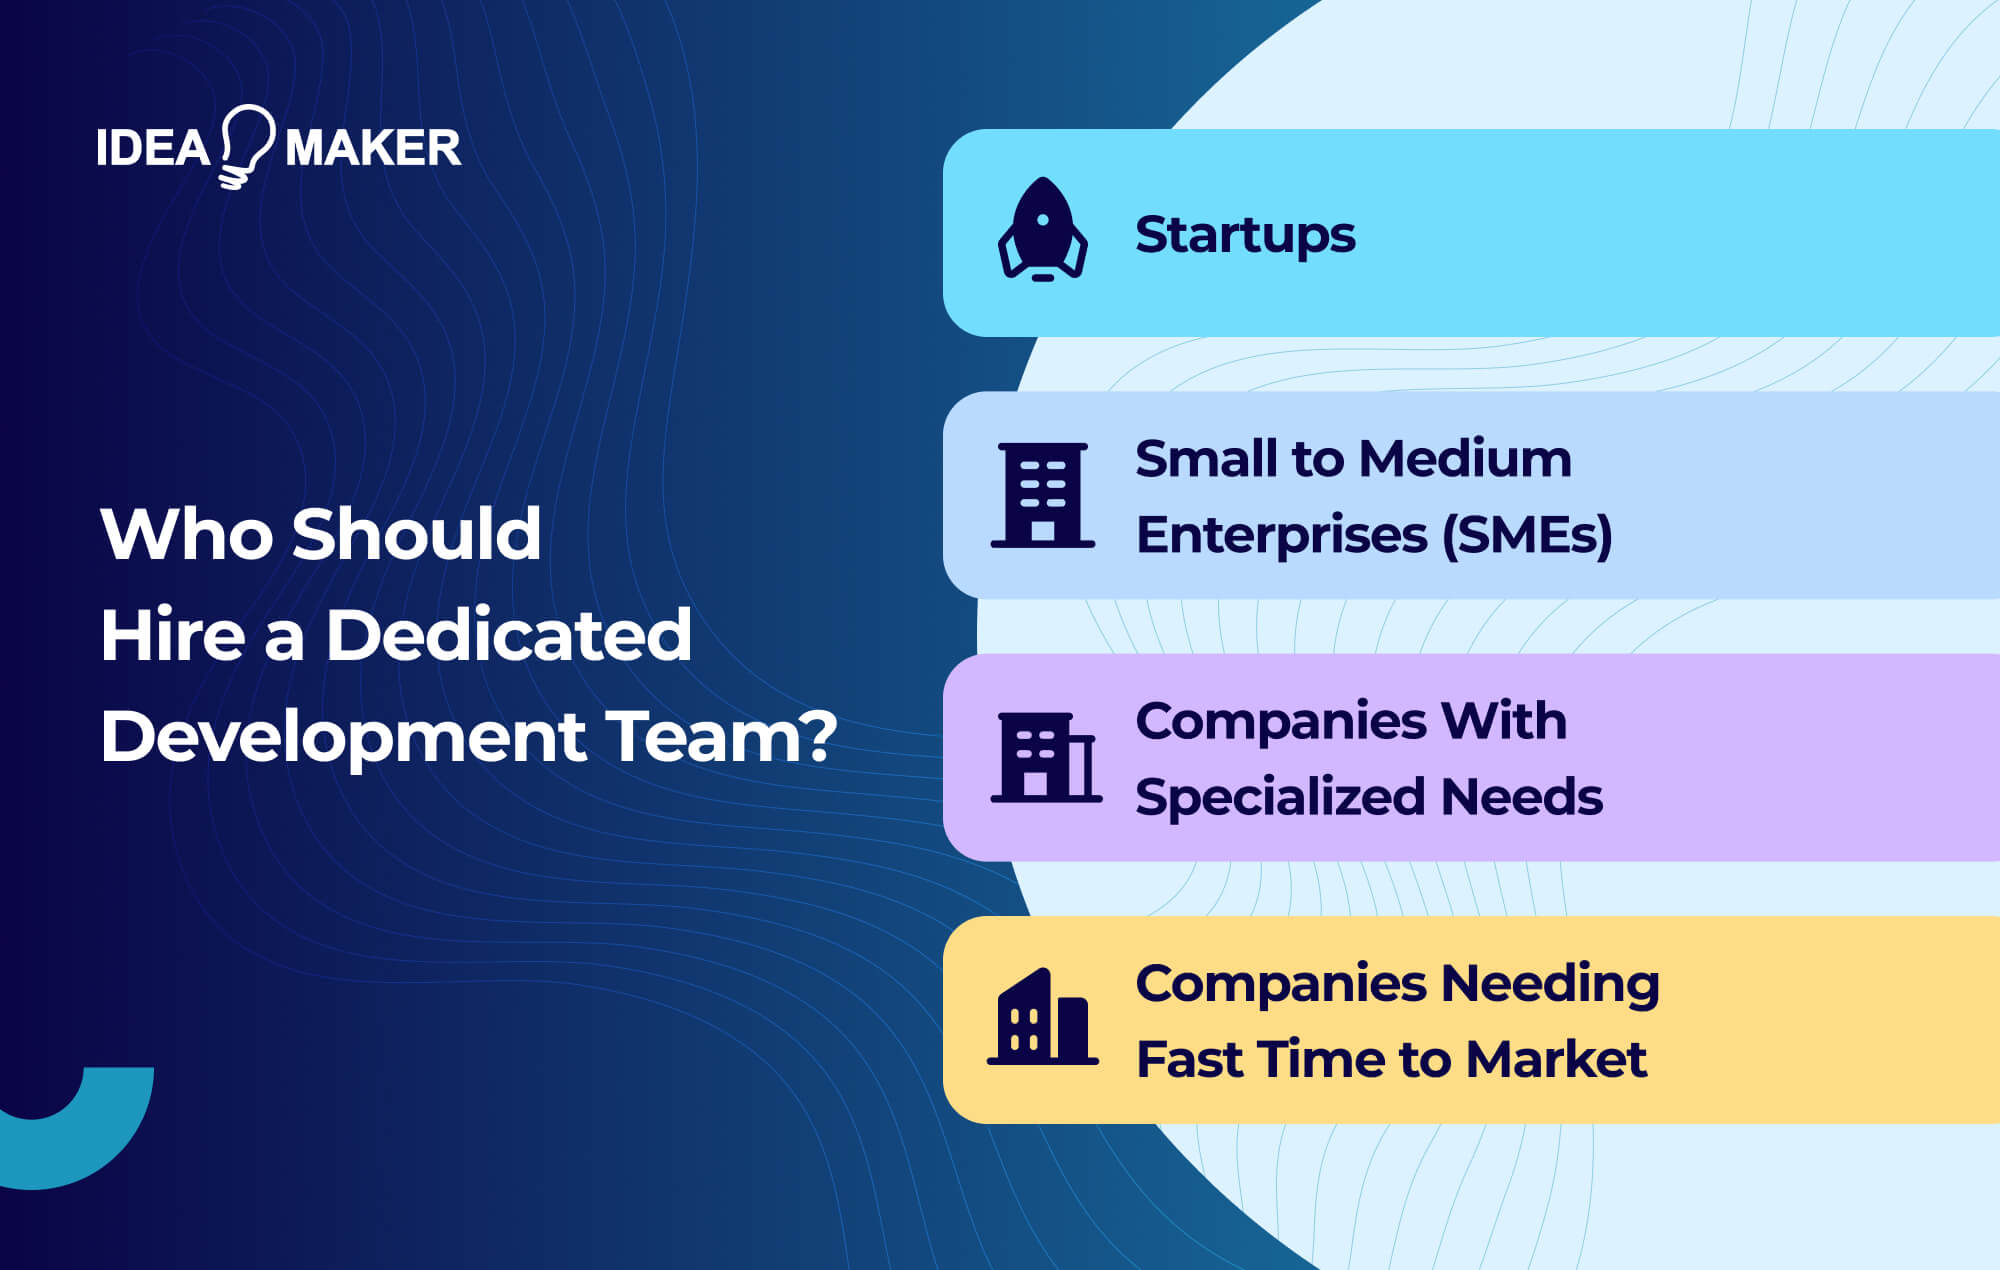 Ideamaker - Who Should Hire a Dedicated Development Team_